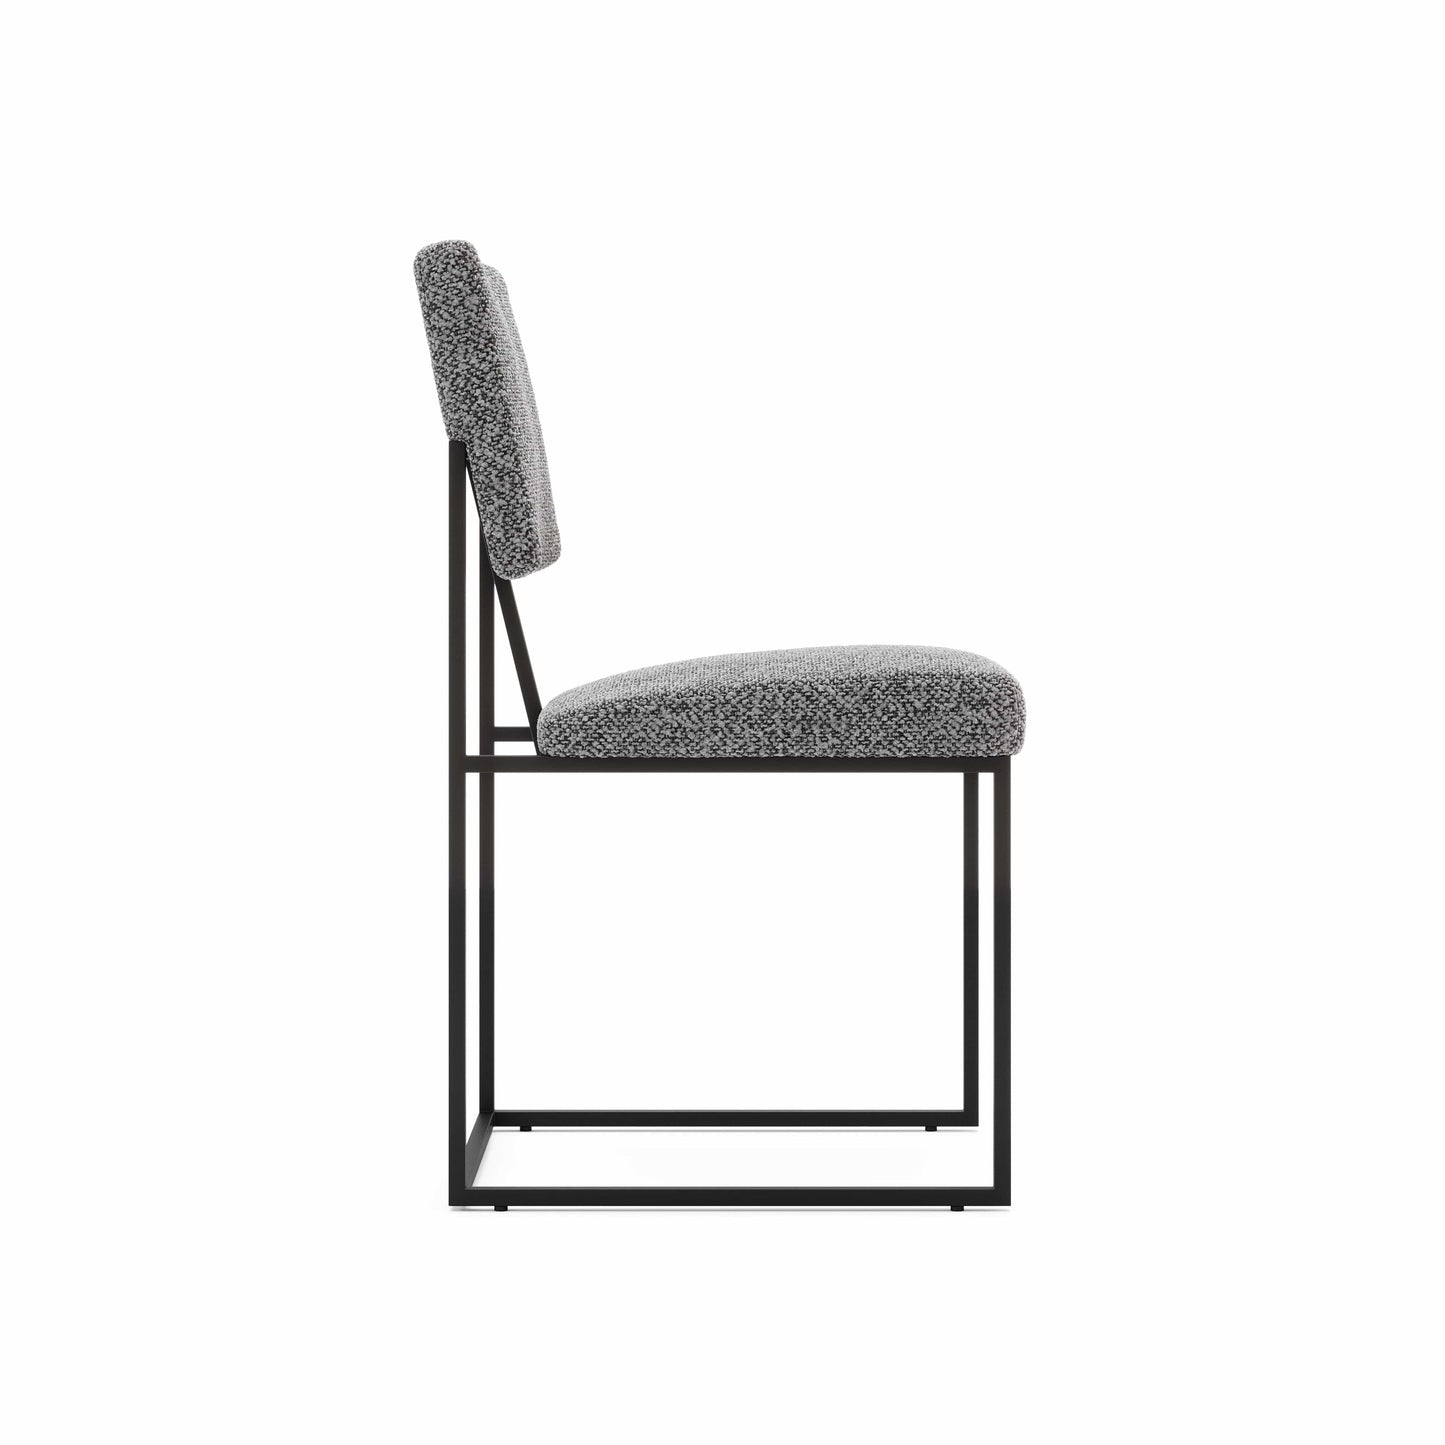 Domkapa Gram Chair by Domkapa- Microfiber (Martindale: 70,000)